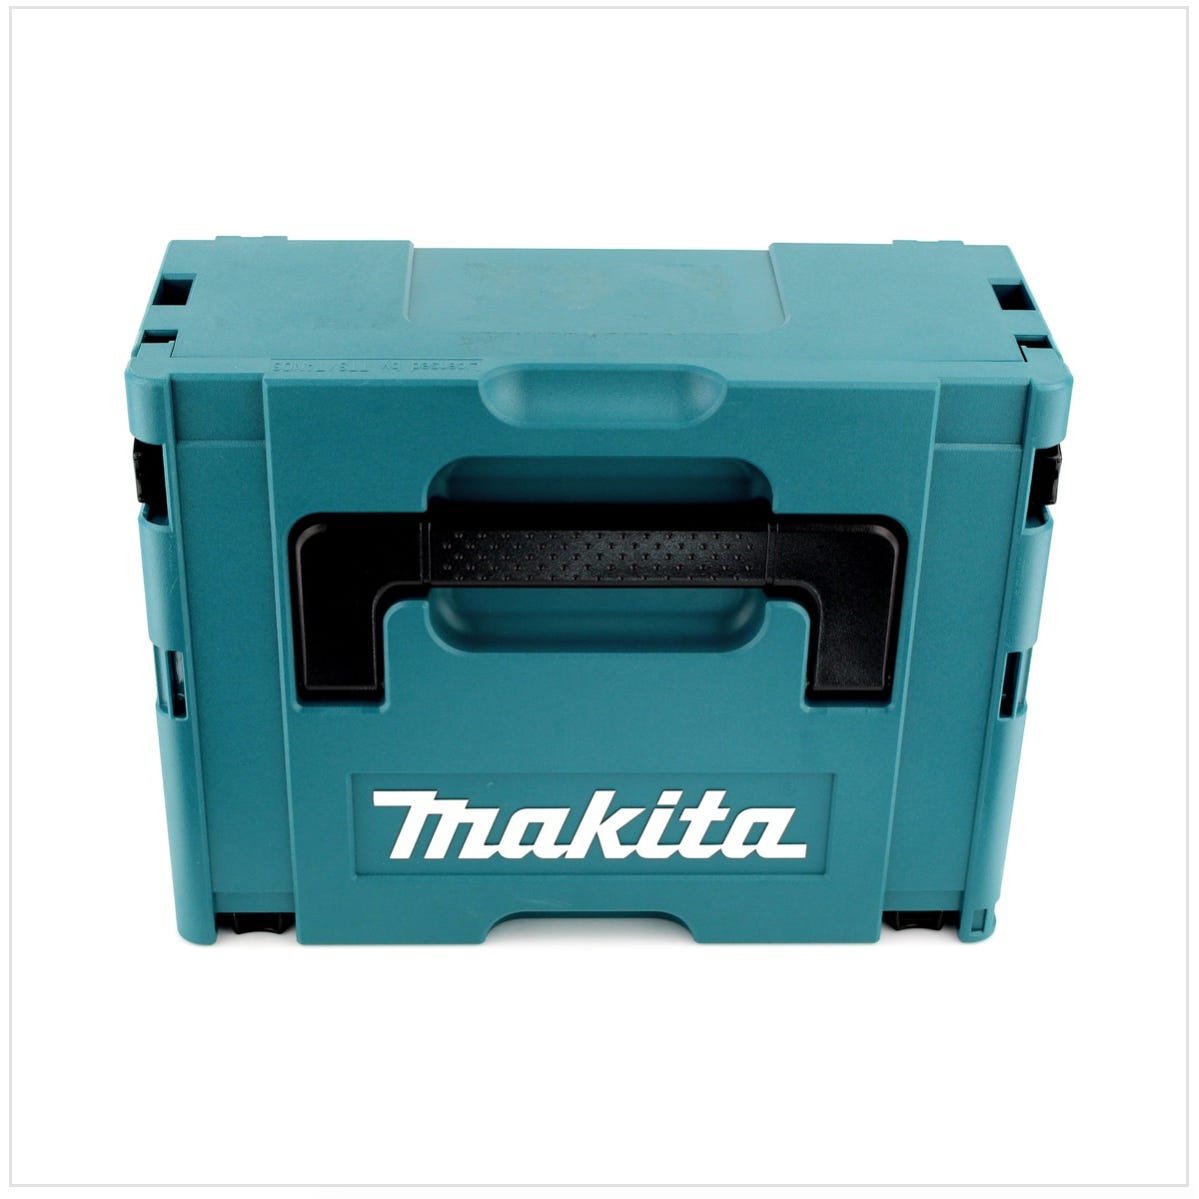 Makita DHP483RM1J 18 V Li-Ion Perceuse visseuse à percussion sans fil 18 V Brushless + 1x Batterie 4,0 Ah + Chargeur + Coffret MAKPAC 2